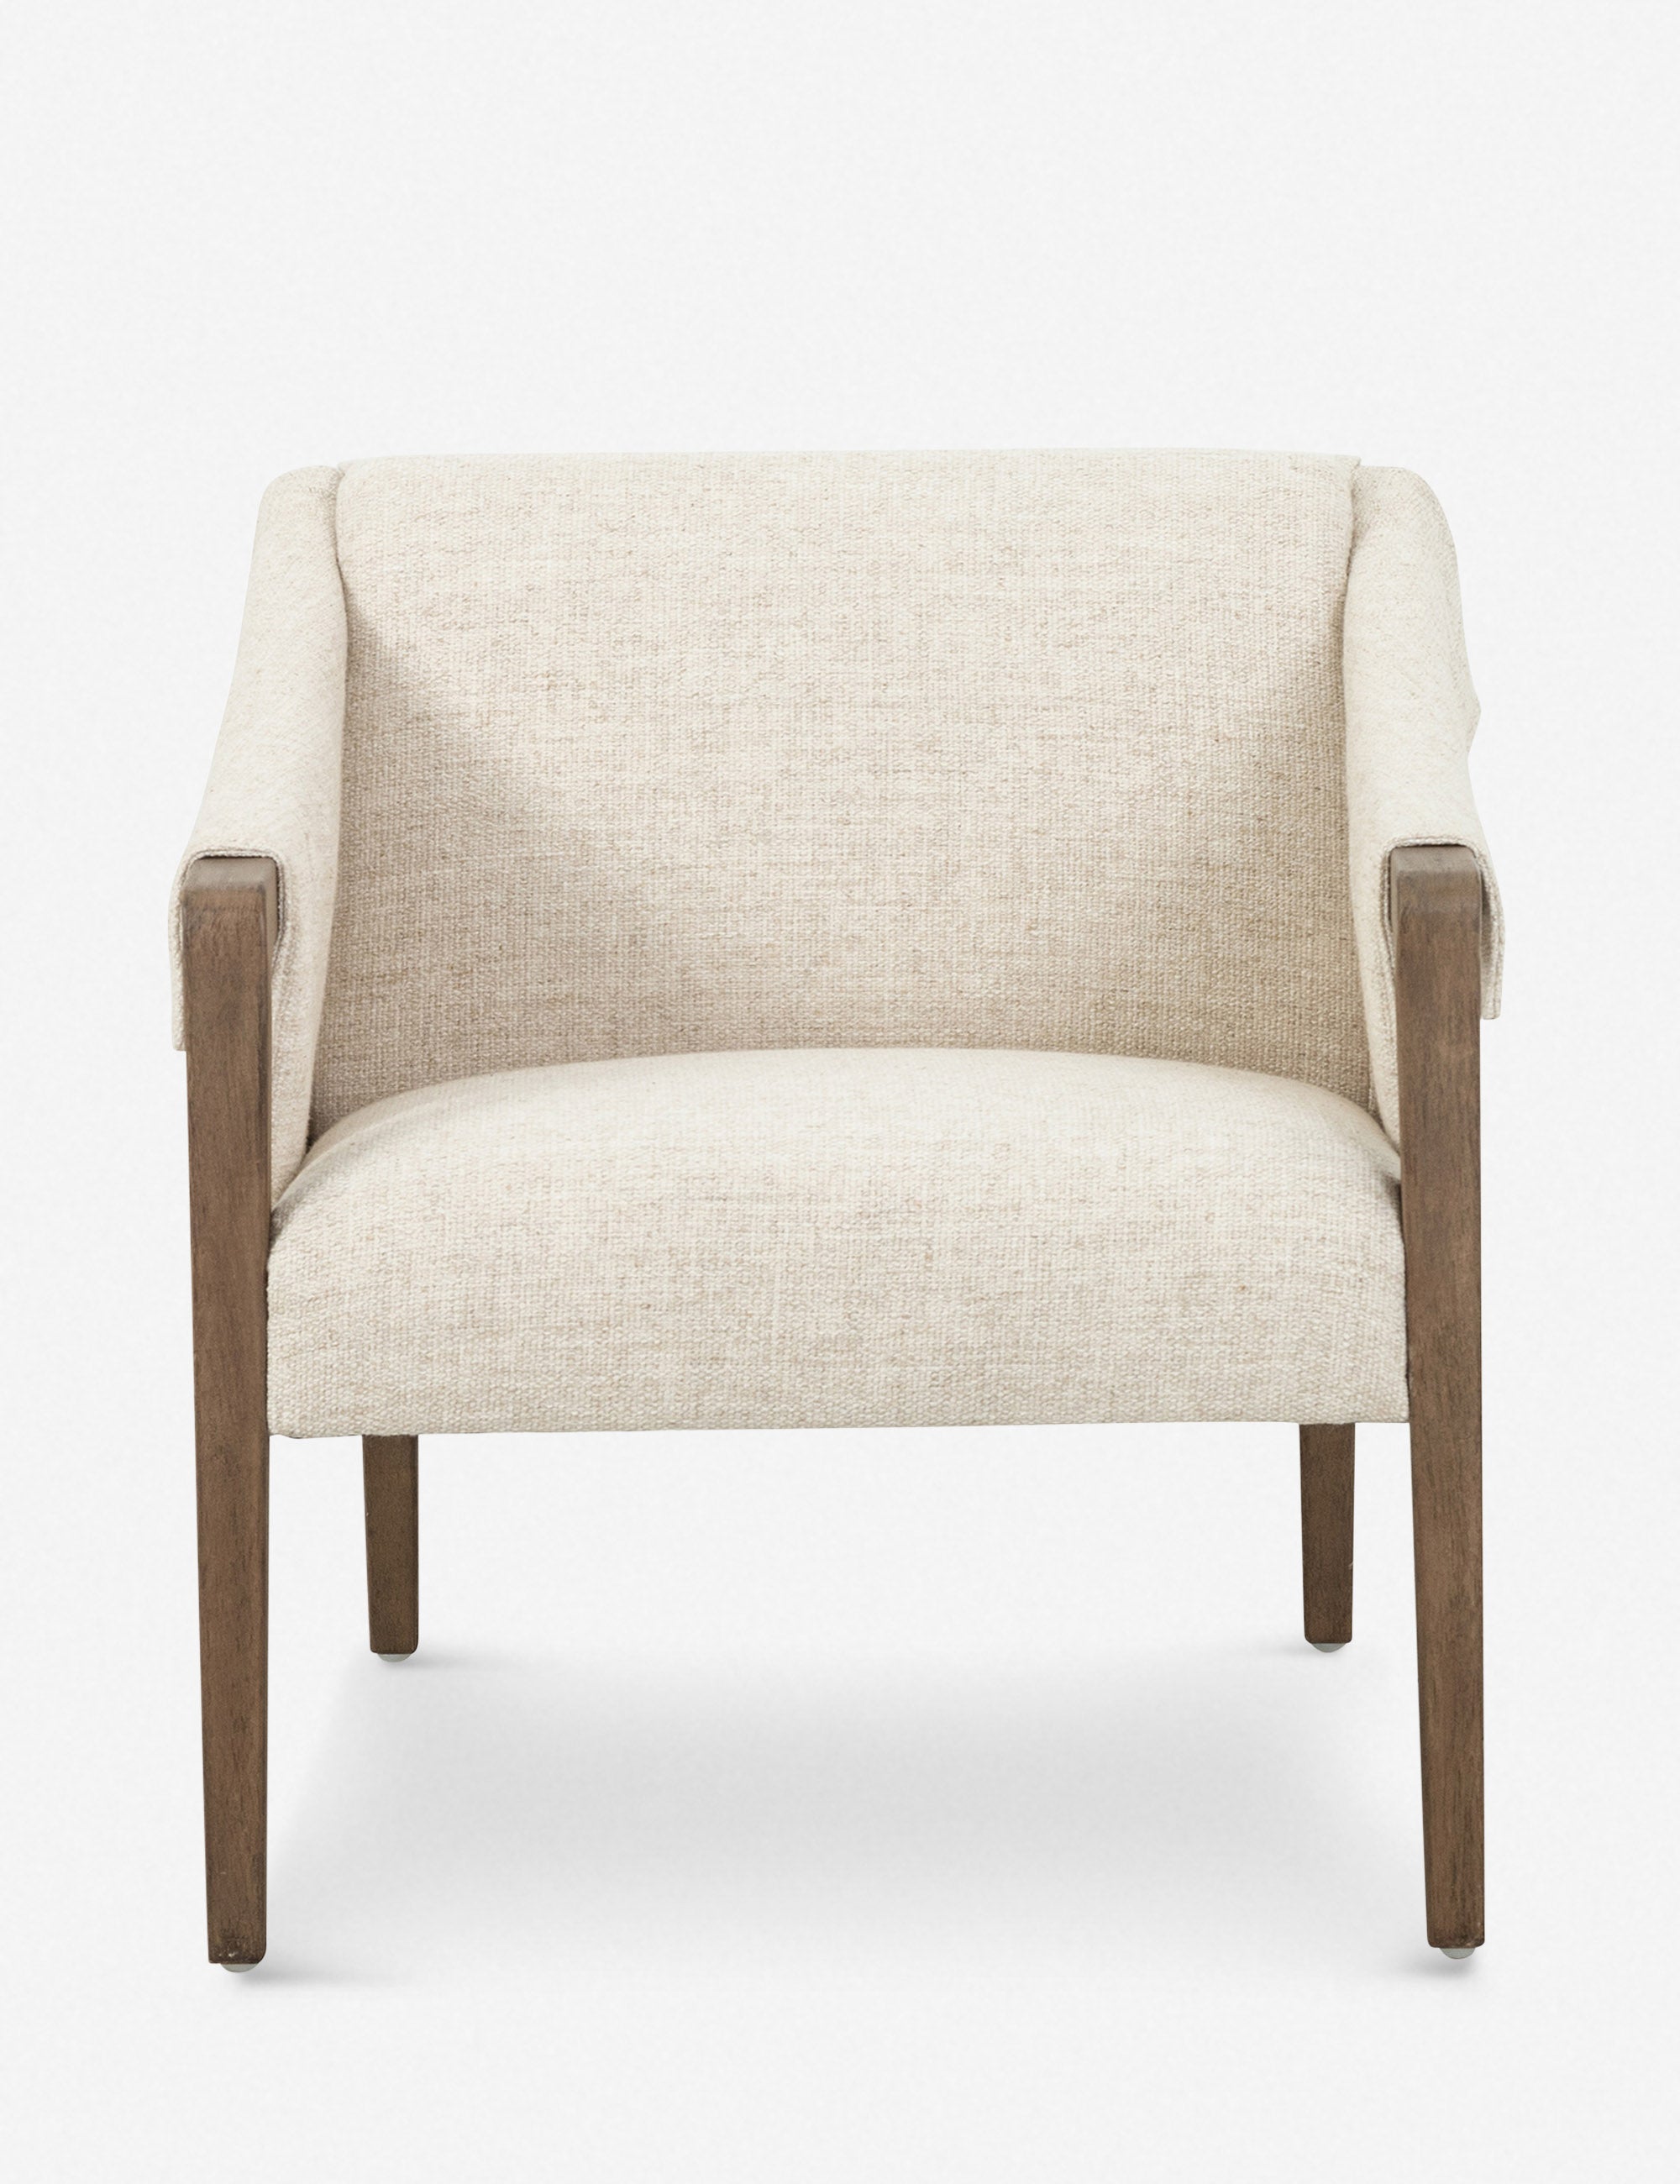 Whittier Accent Chair, Cream Linen